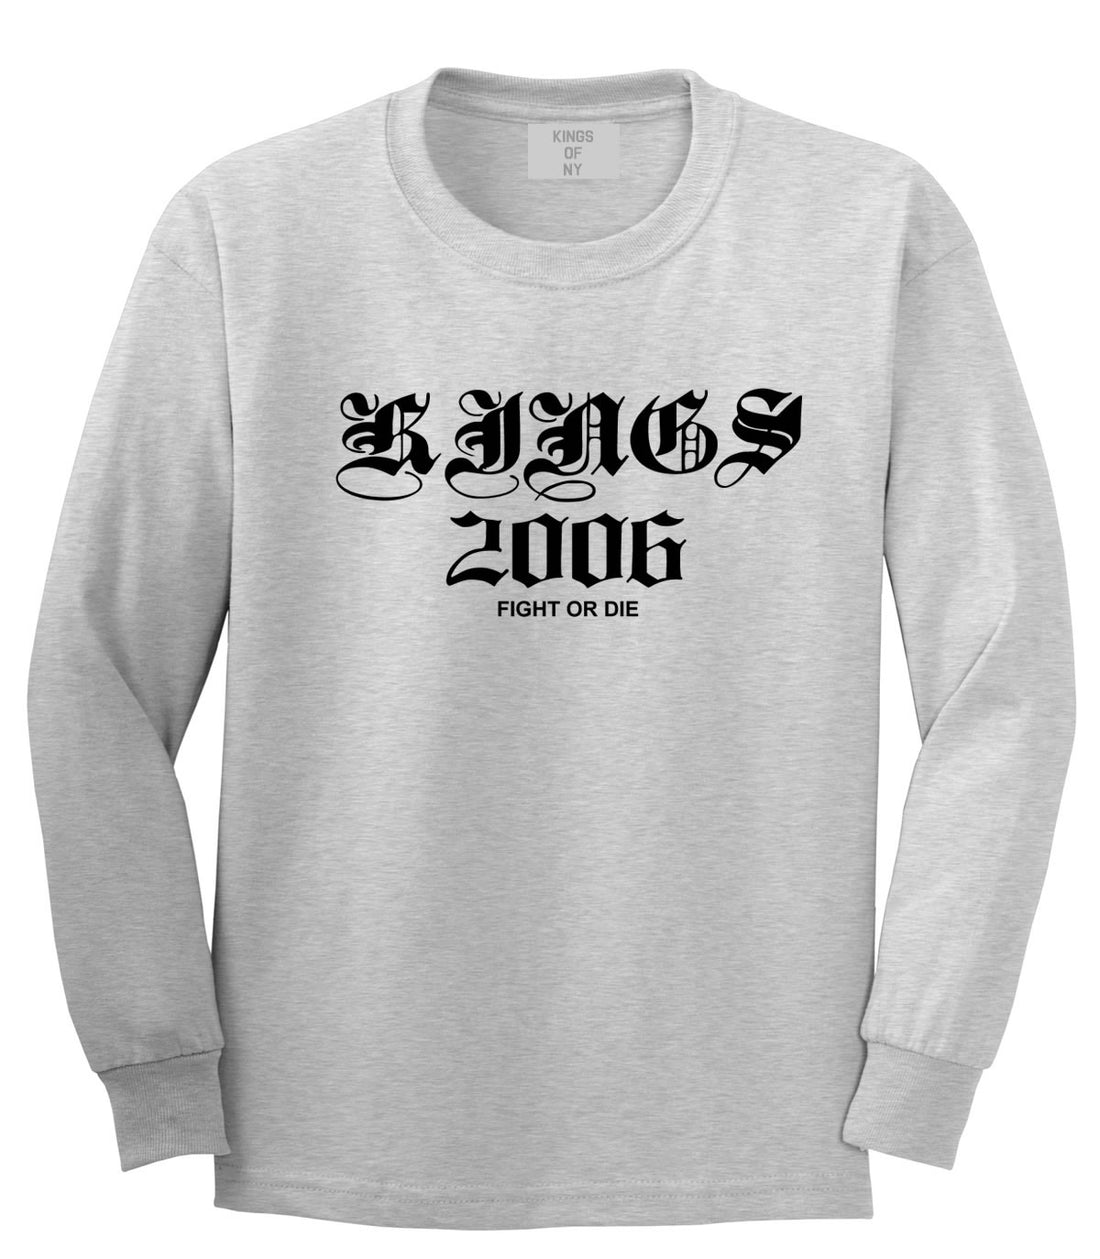 Kings Of NY Kings 2006 Long Sleeve T-Shirt in Grey